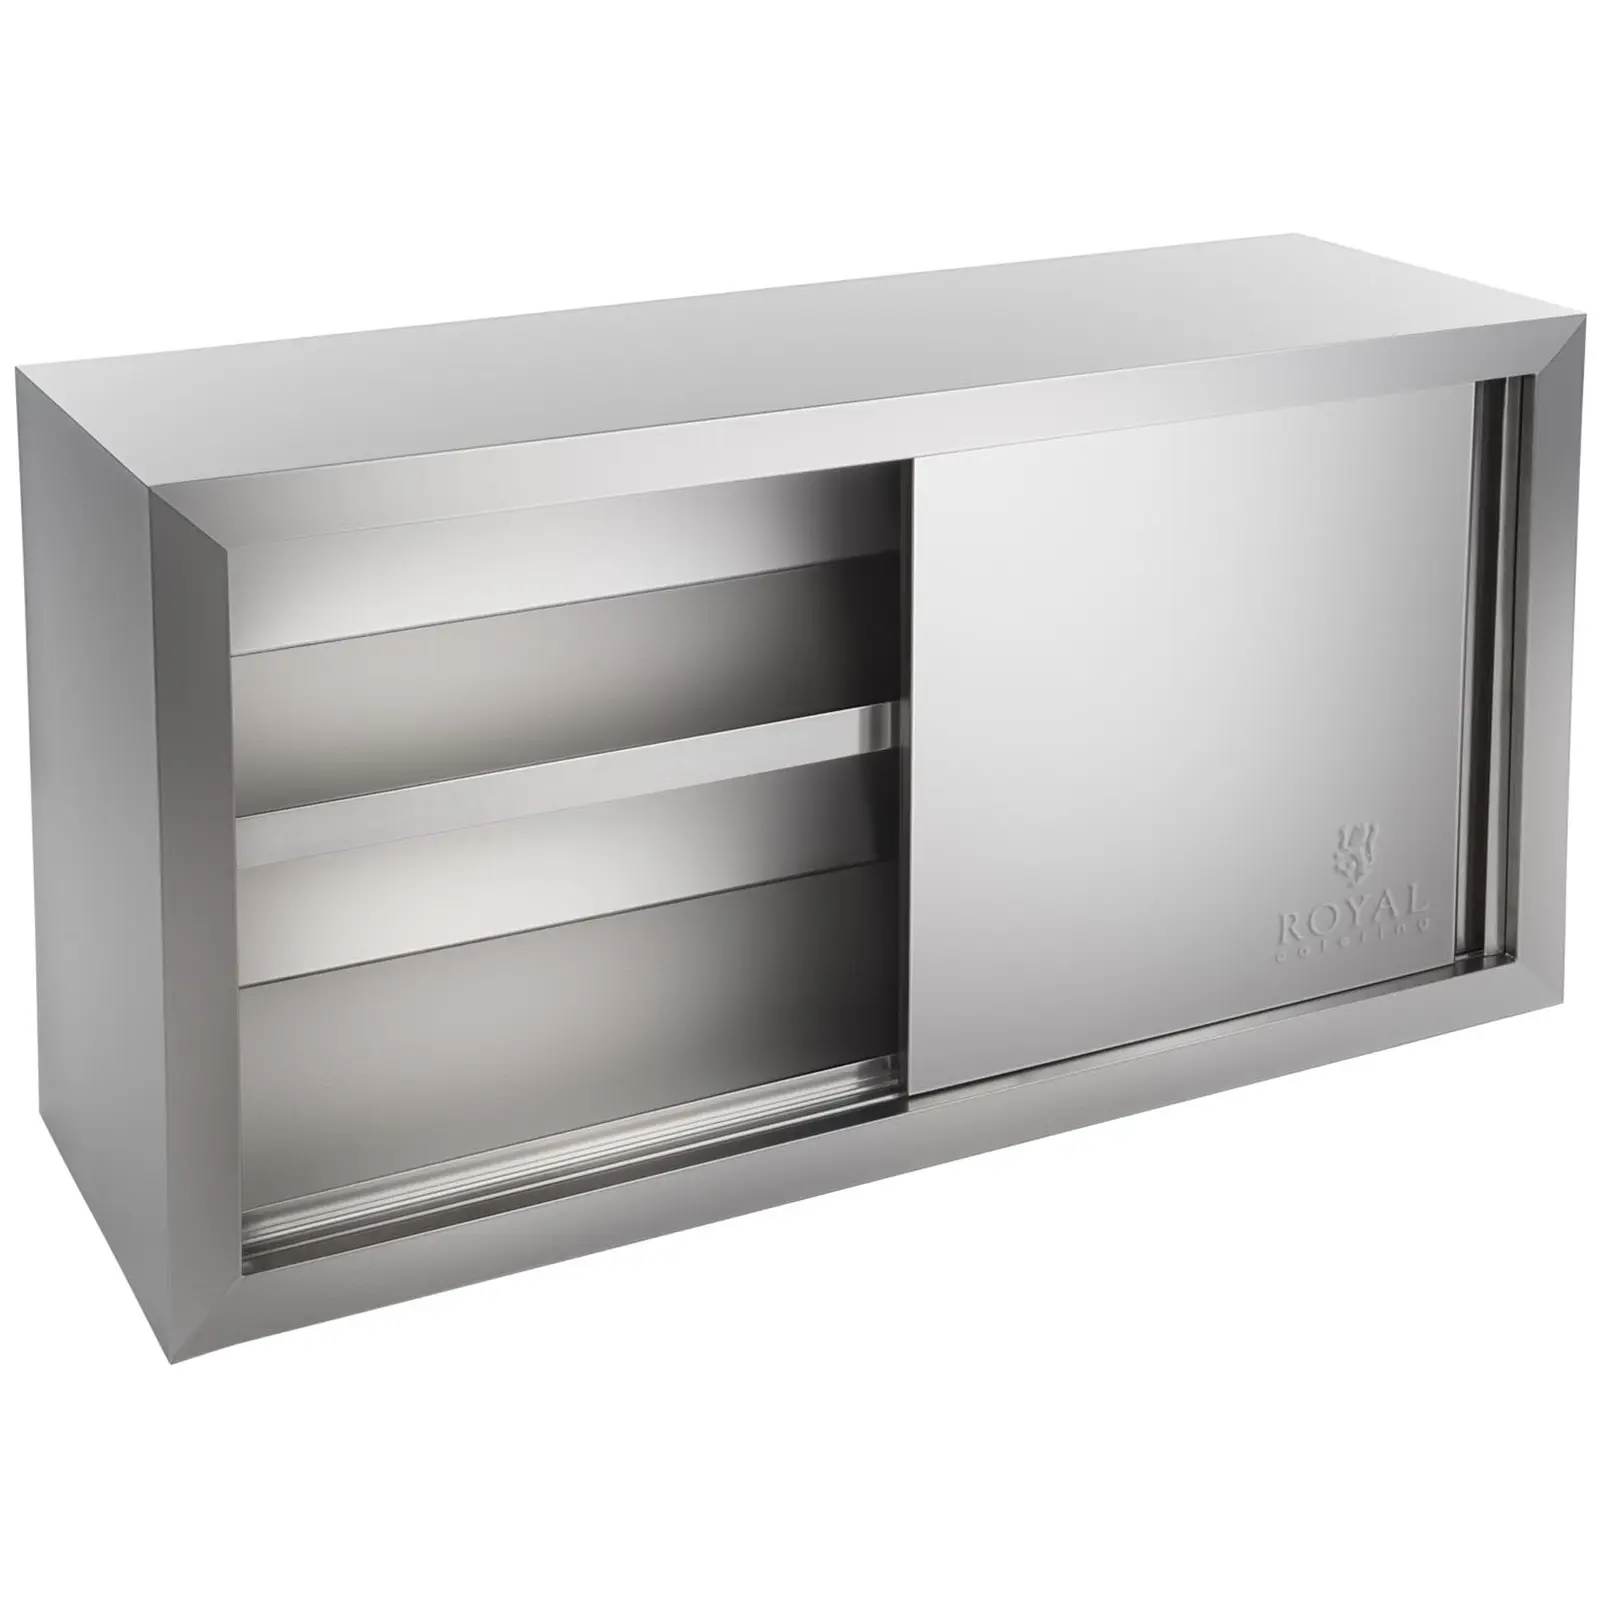 Stainless steel wall cupboard - 120 cm